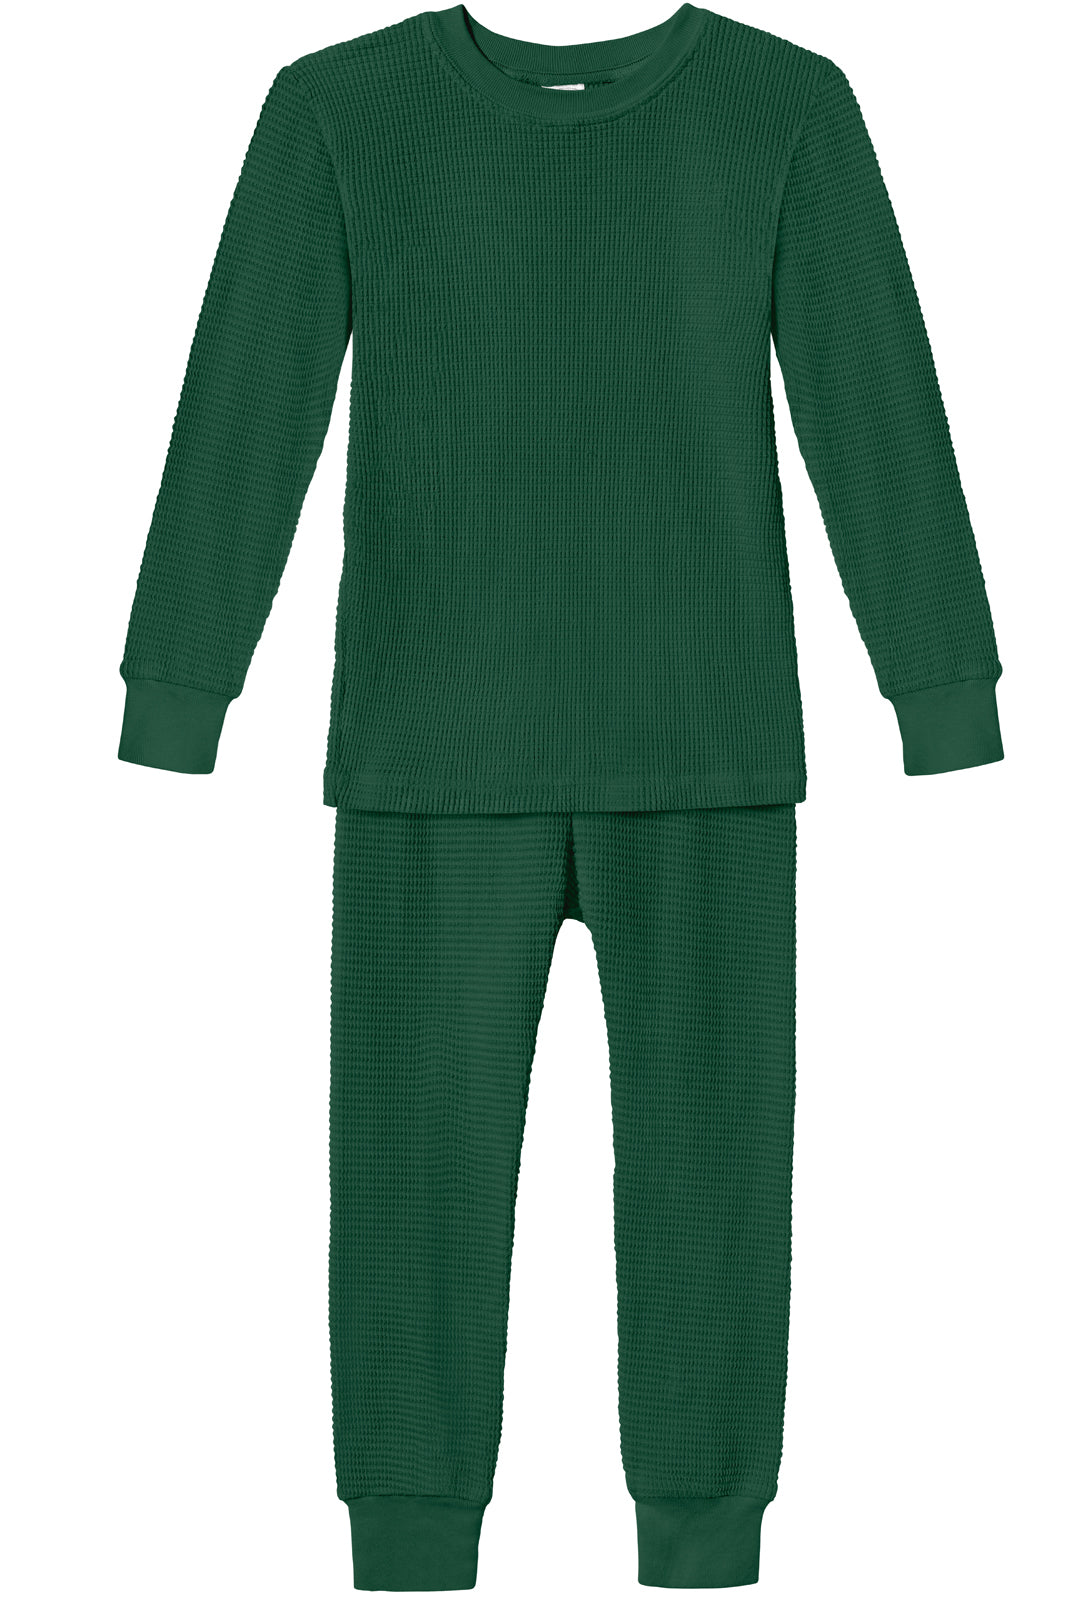 Men Cotton Thermal Underwear Long Inner Wear Pajama Autumn Winter  Tops+Pants Set